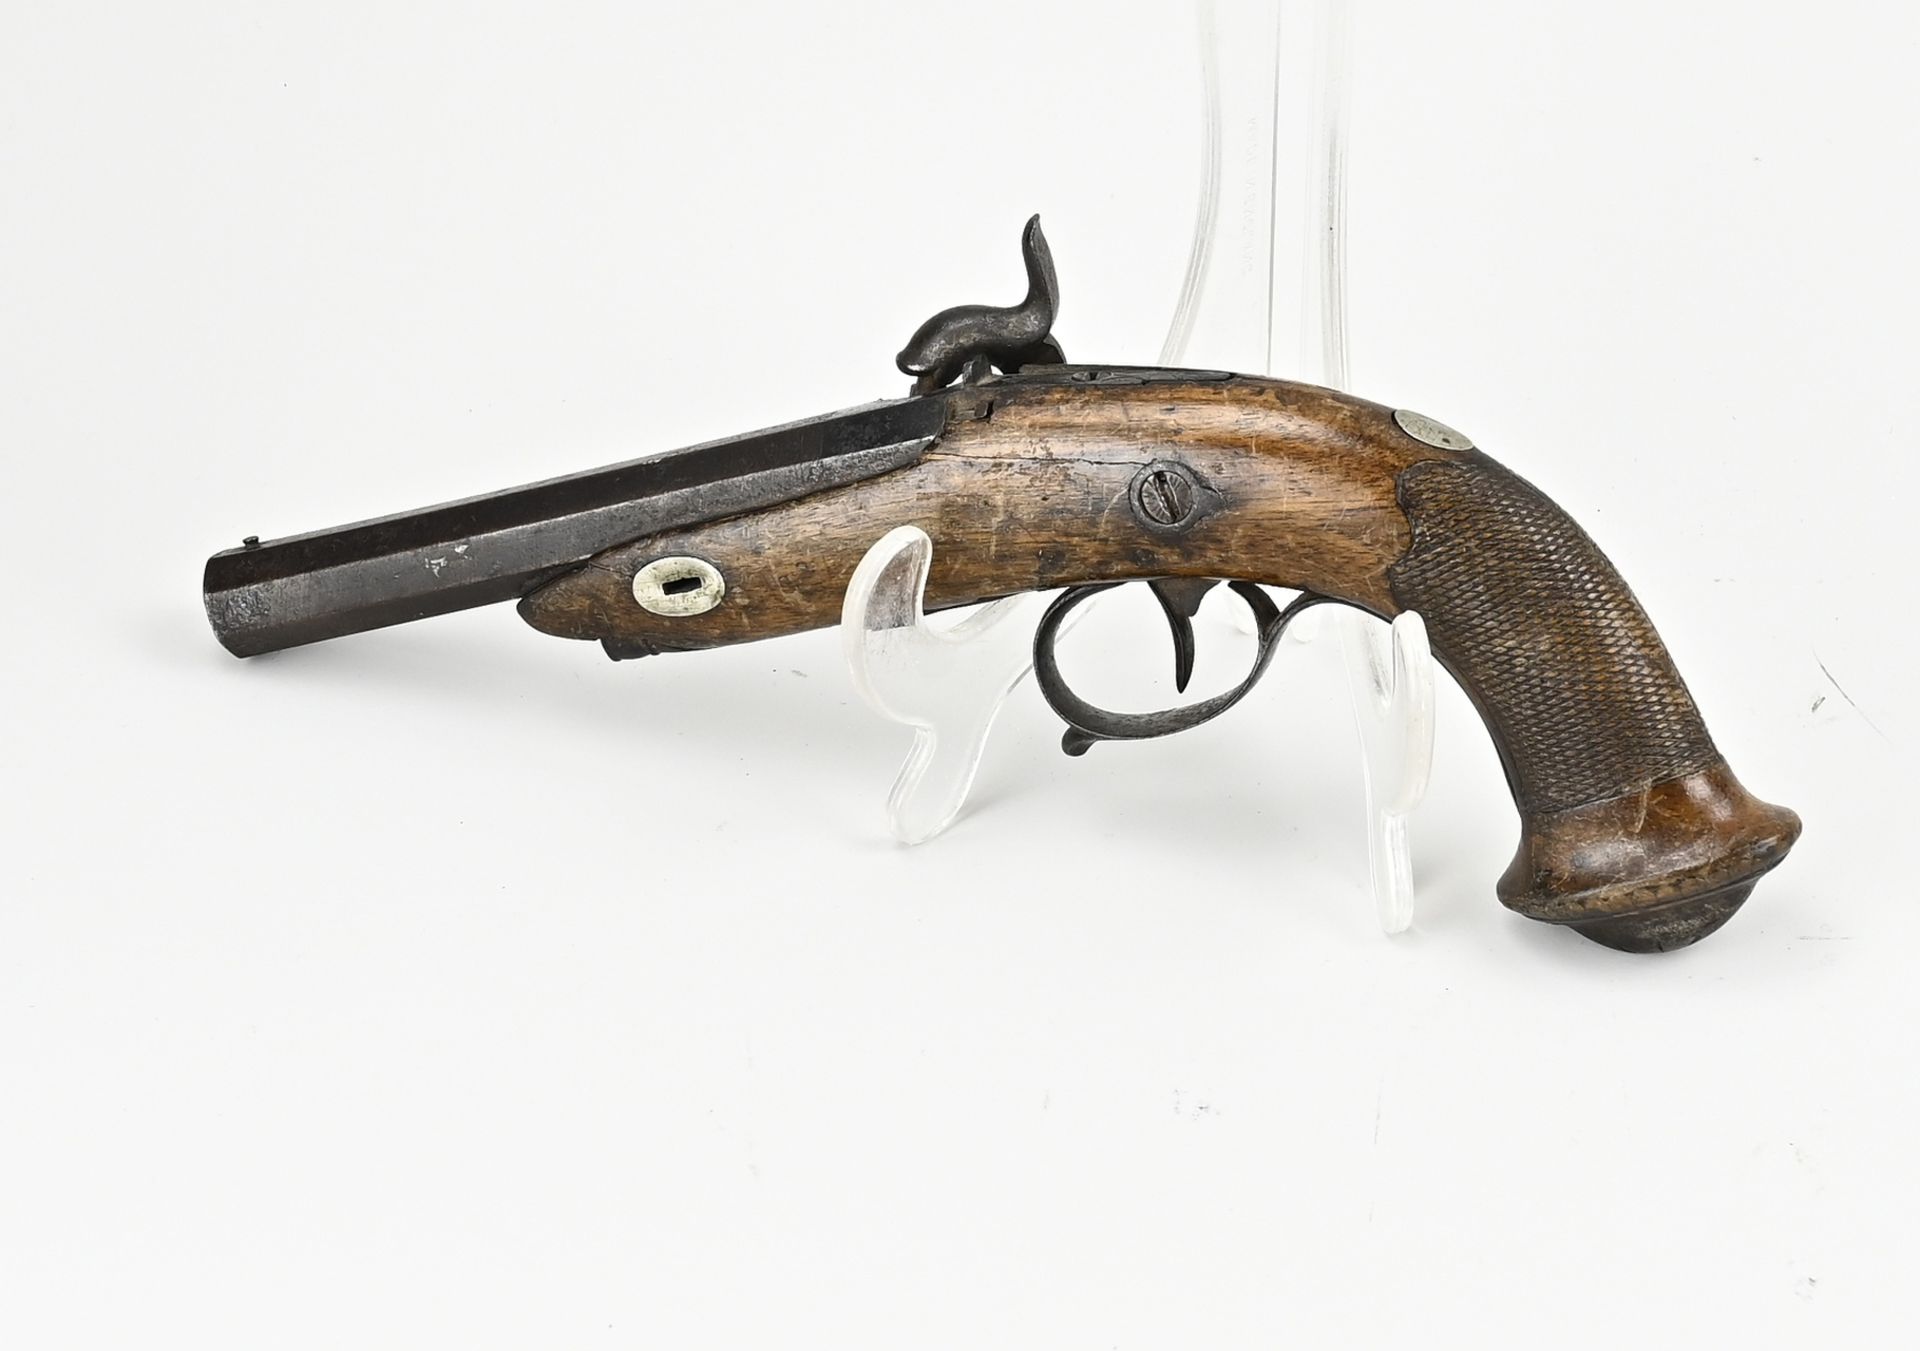 Antique pistol, L 36 cm. - Image 2 of 2